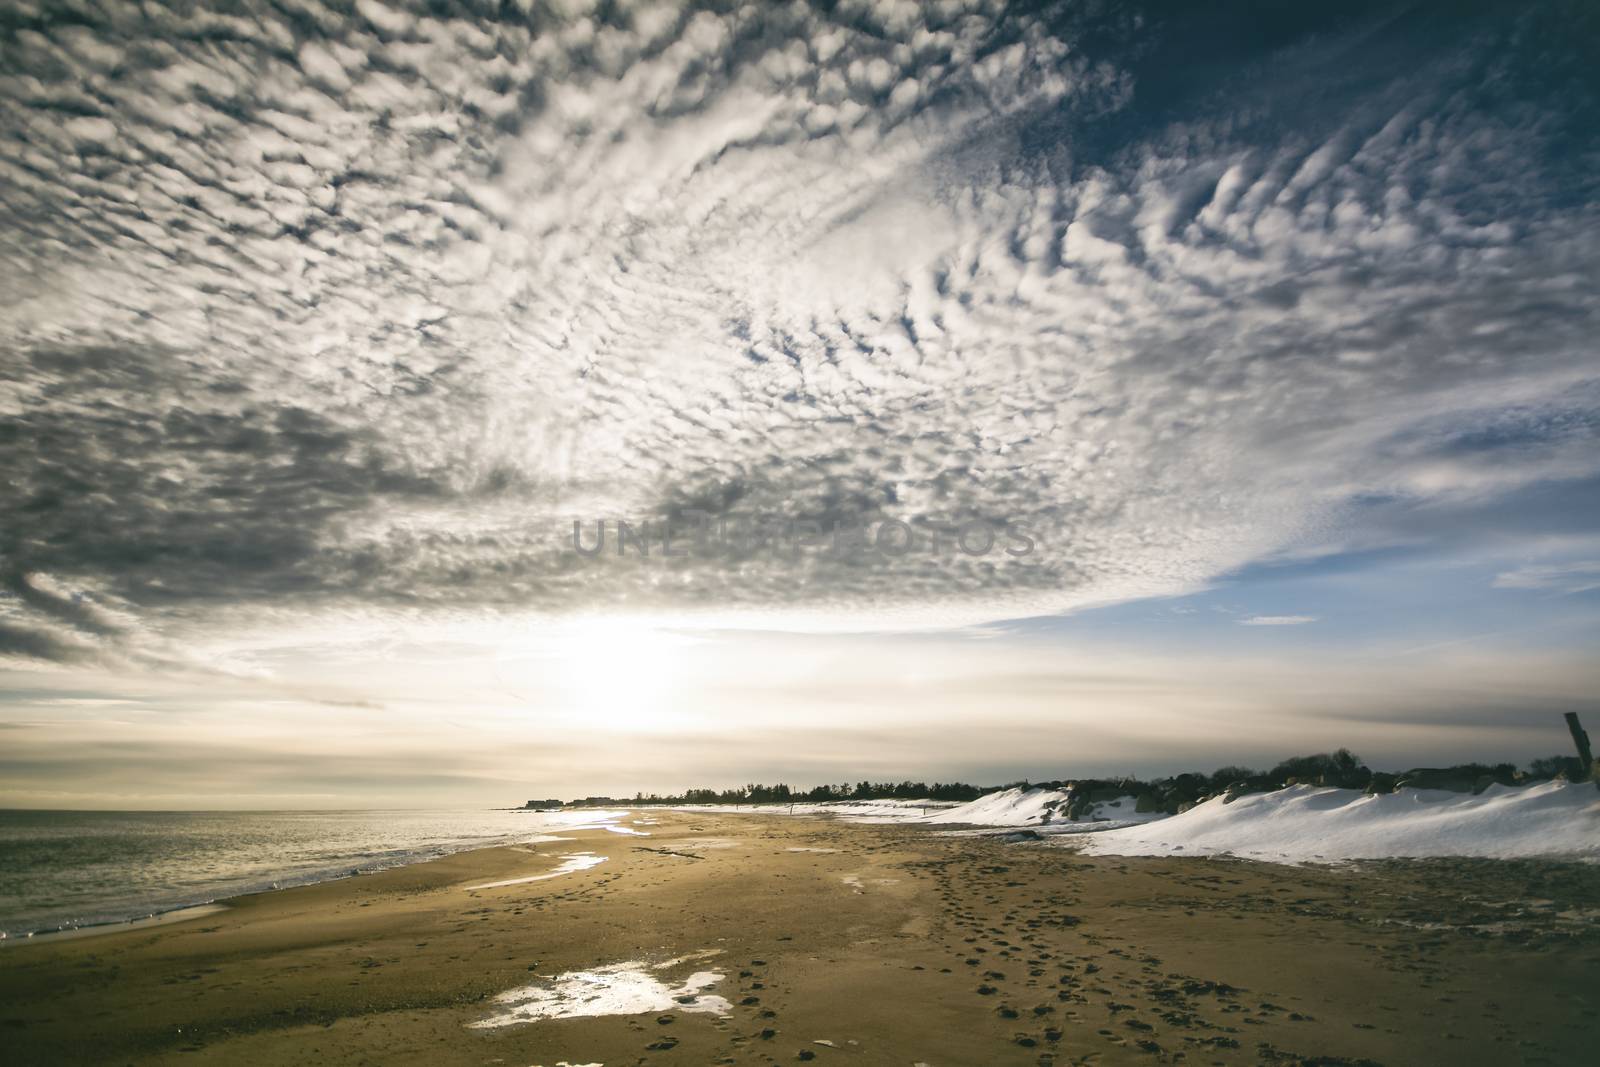 Photograph shows a coastal landscape in Rhode Island